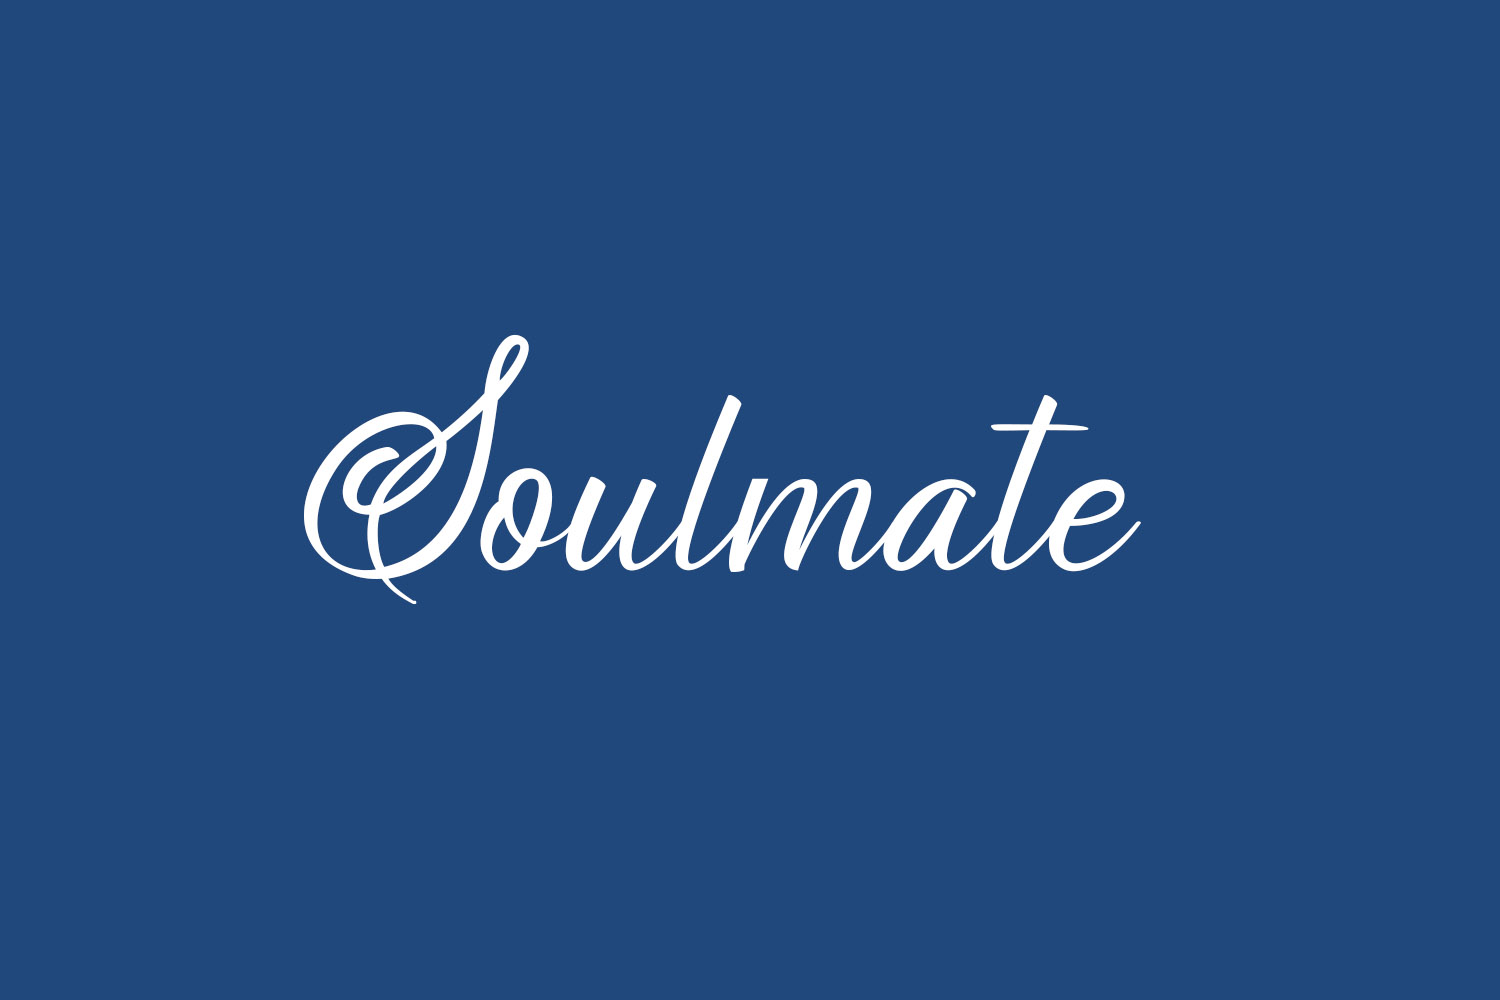 Soulmate Free Font